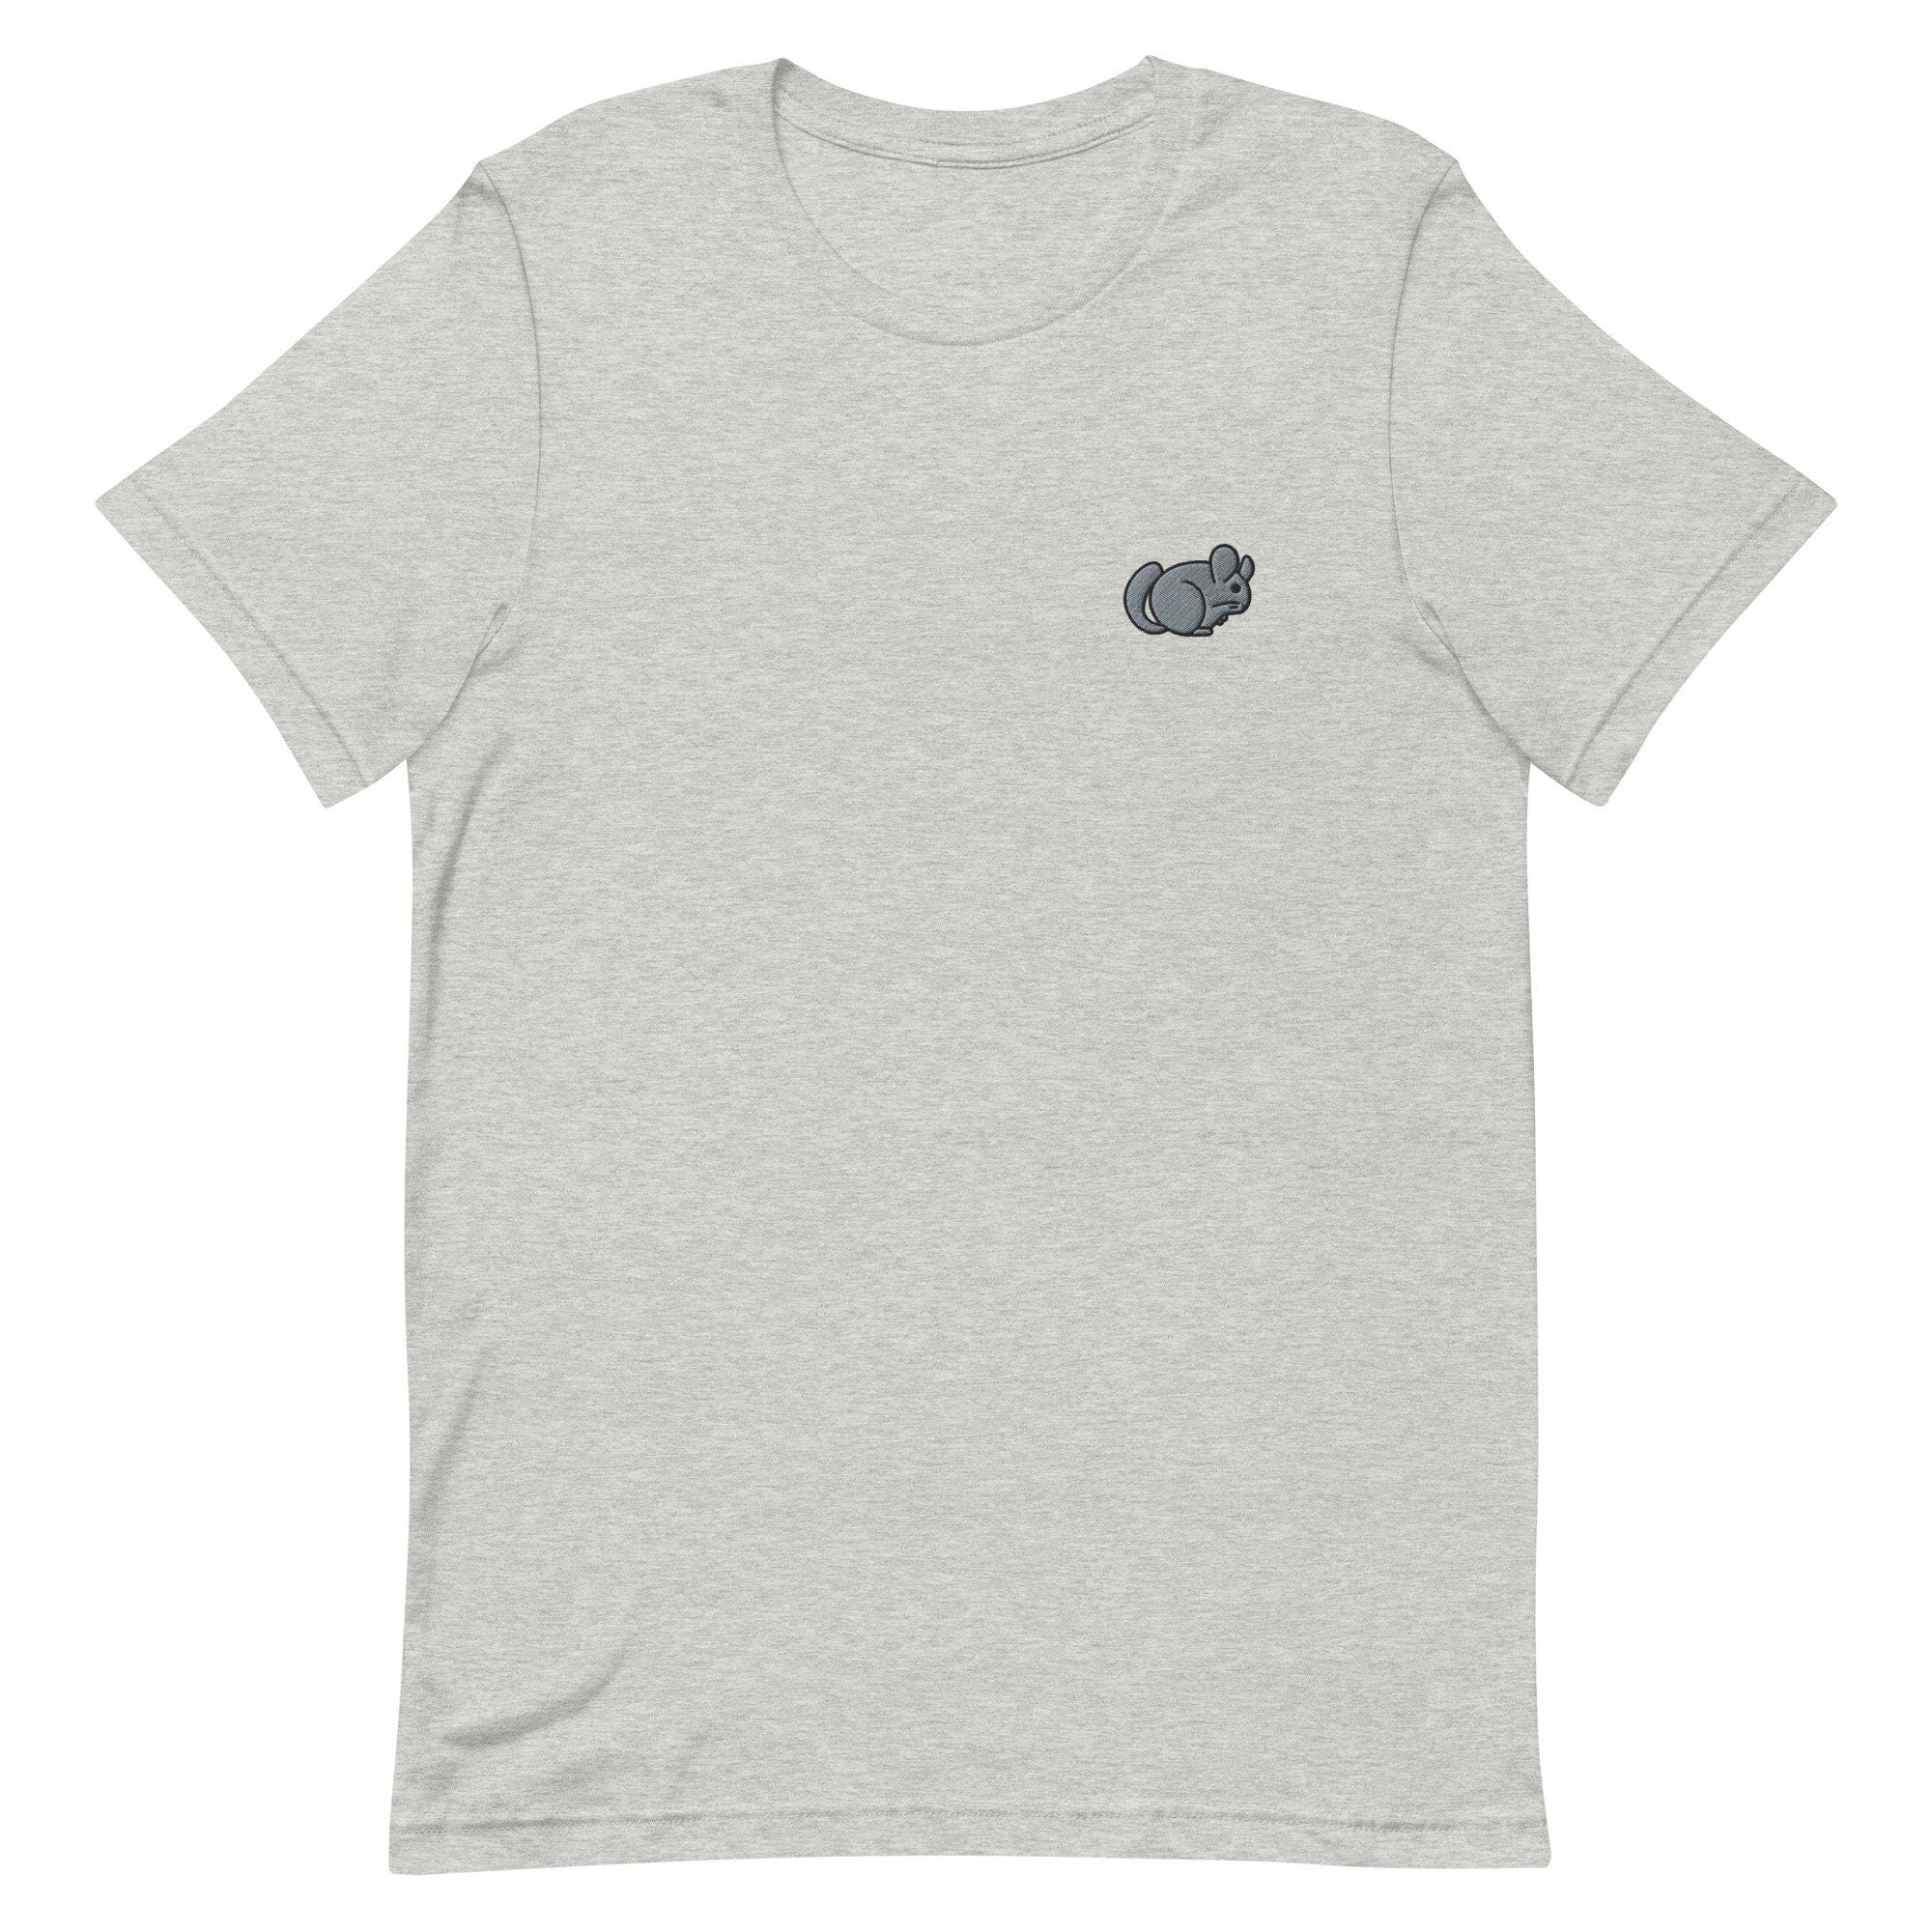 Chinchilla Premium Men's T-Shirt, Embroidered Men's T-Shirt Gift for Boyfriend, Men's Short Sleeve Shirt - Multiple Colors